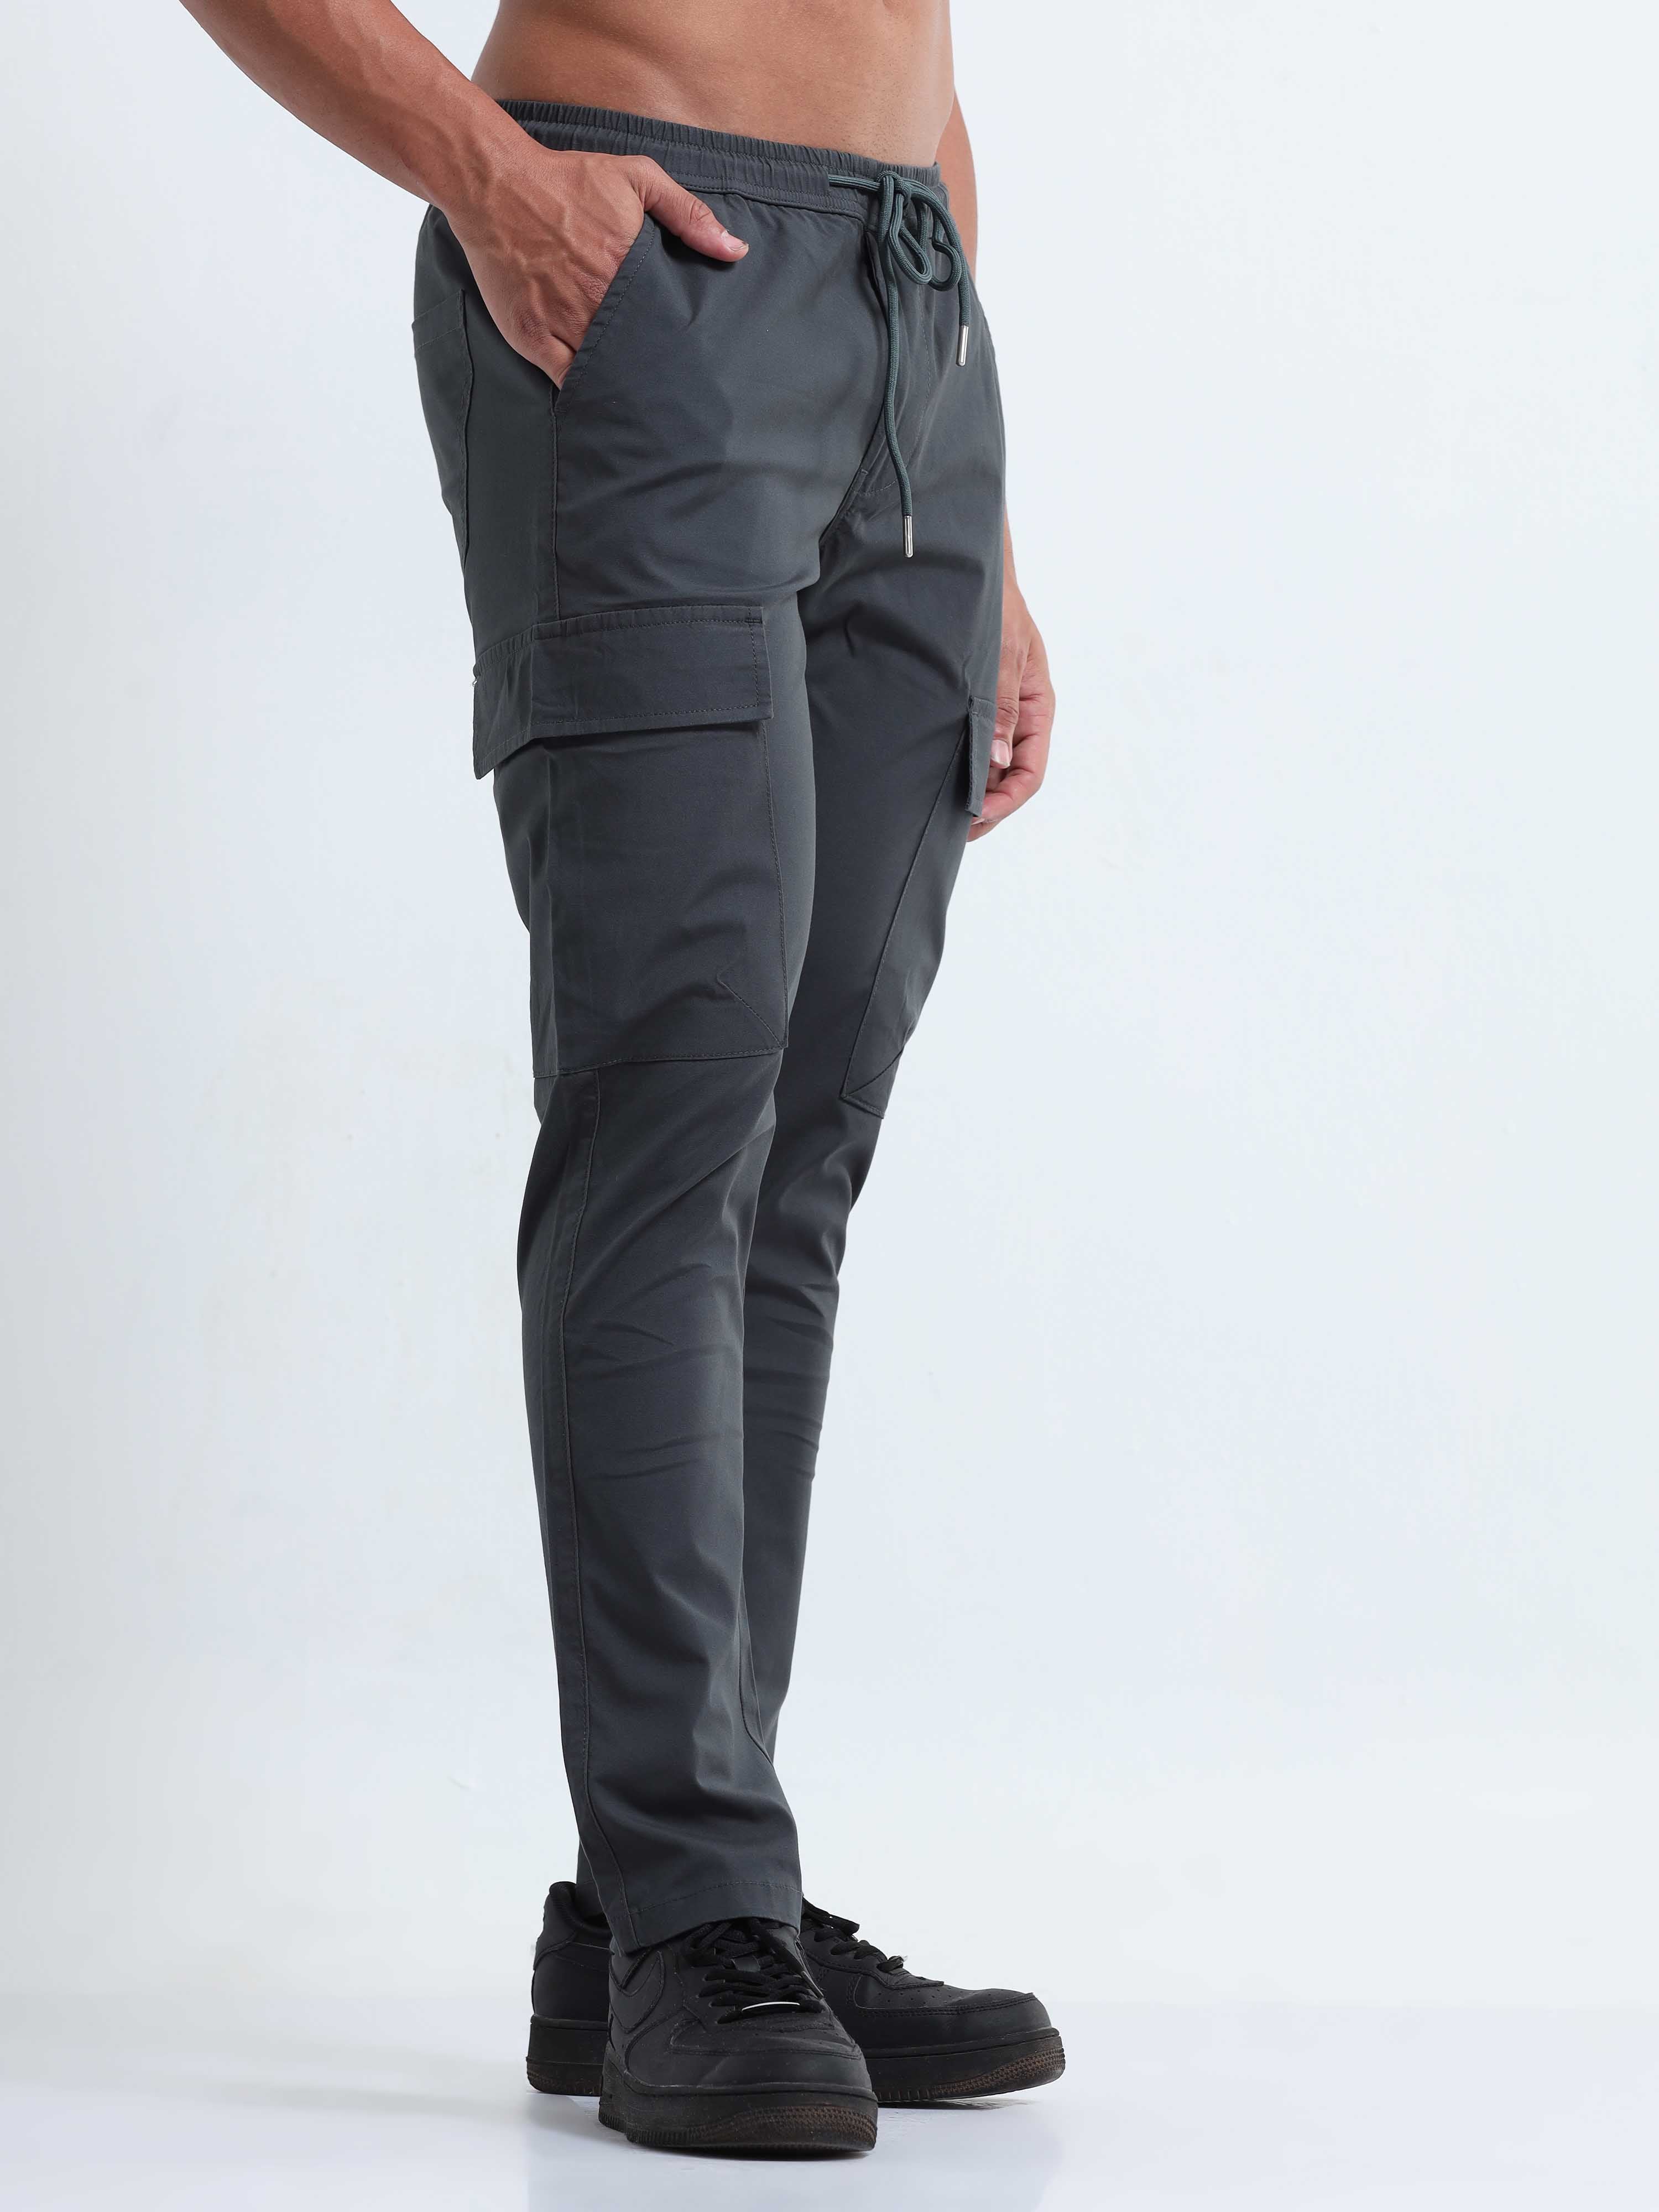 Grey Utility Cargo Pants V3 | Pants outfit men, Grey cargo pants, Cargo  pants outfit men